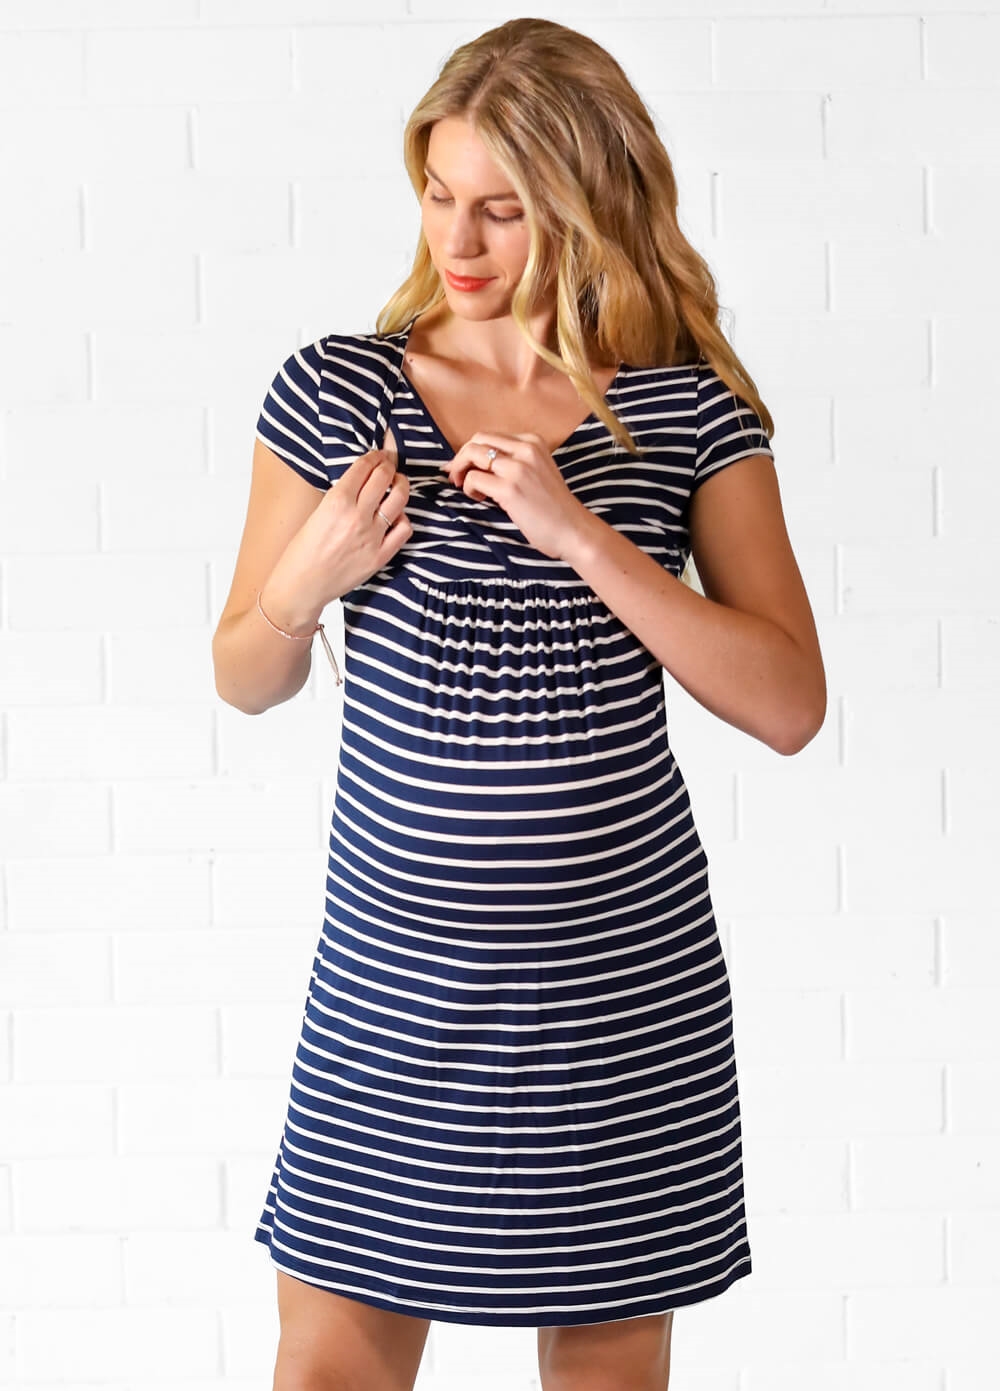 Lait & Co - Baptiste Maternity Nursing Dress - Navy Stripe | Queen Bee